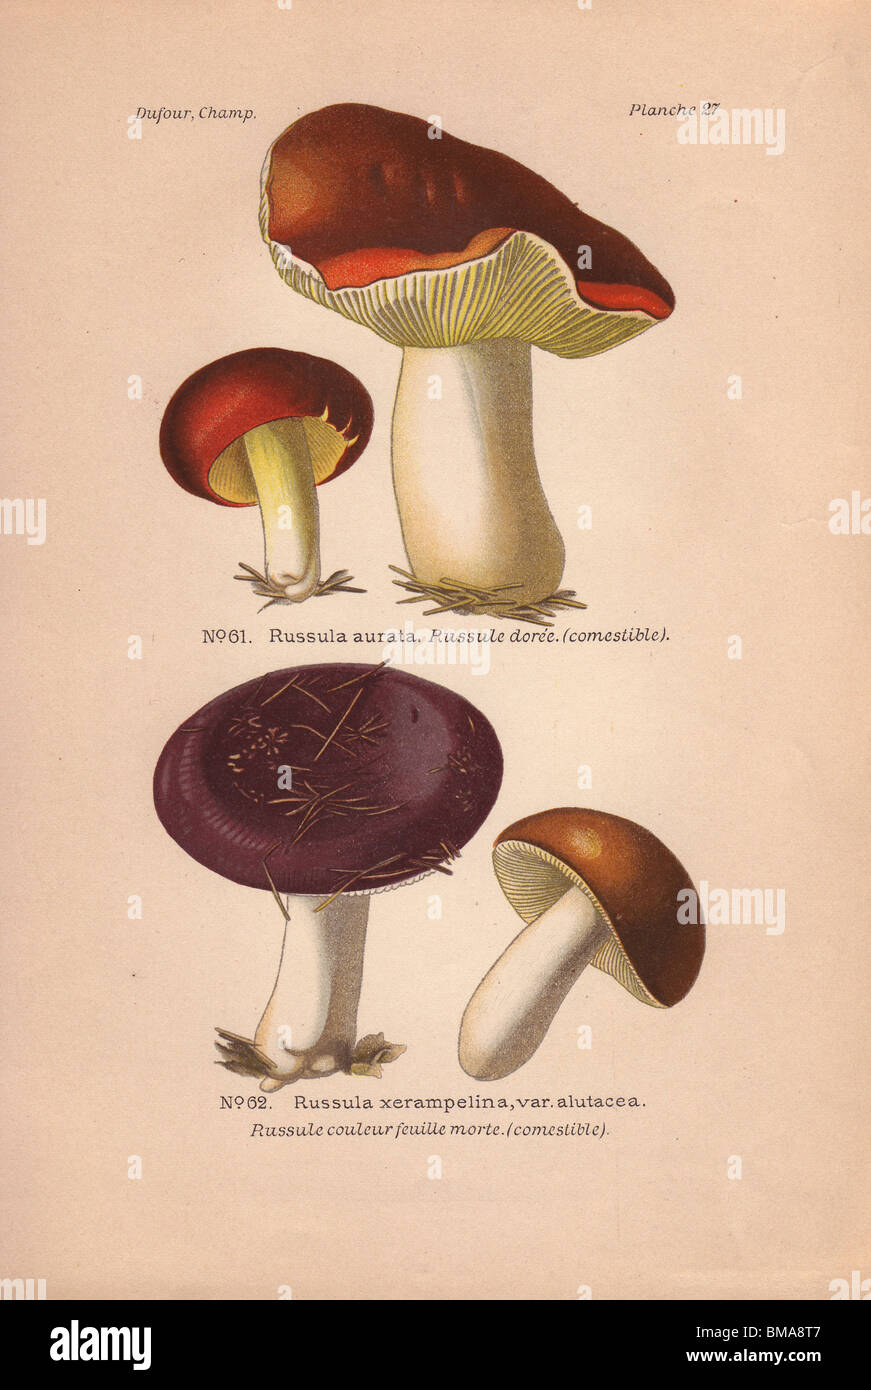 Edible mushrooms: gilded brittlegill mushoom (Russula aurata) and shrimp mushroom (Russula xerampelina). Stock Photo